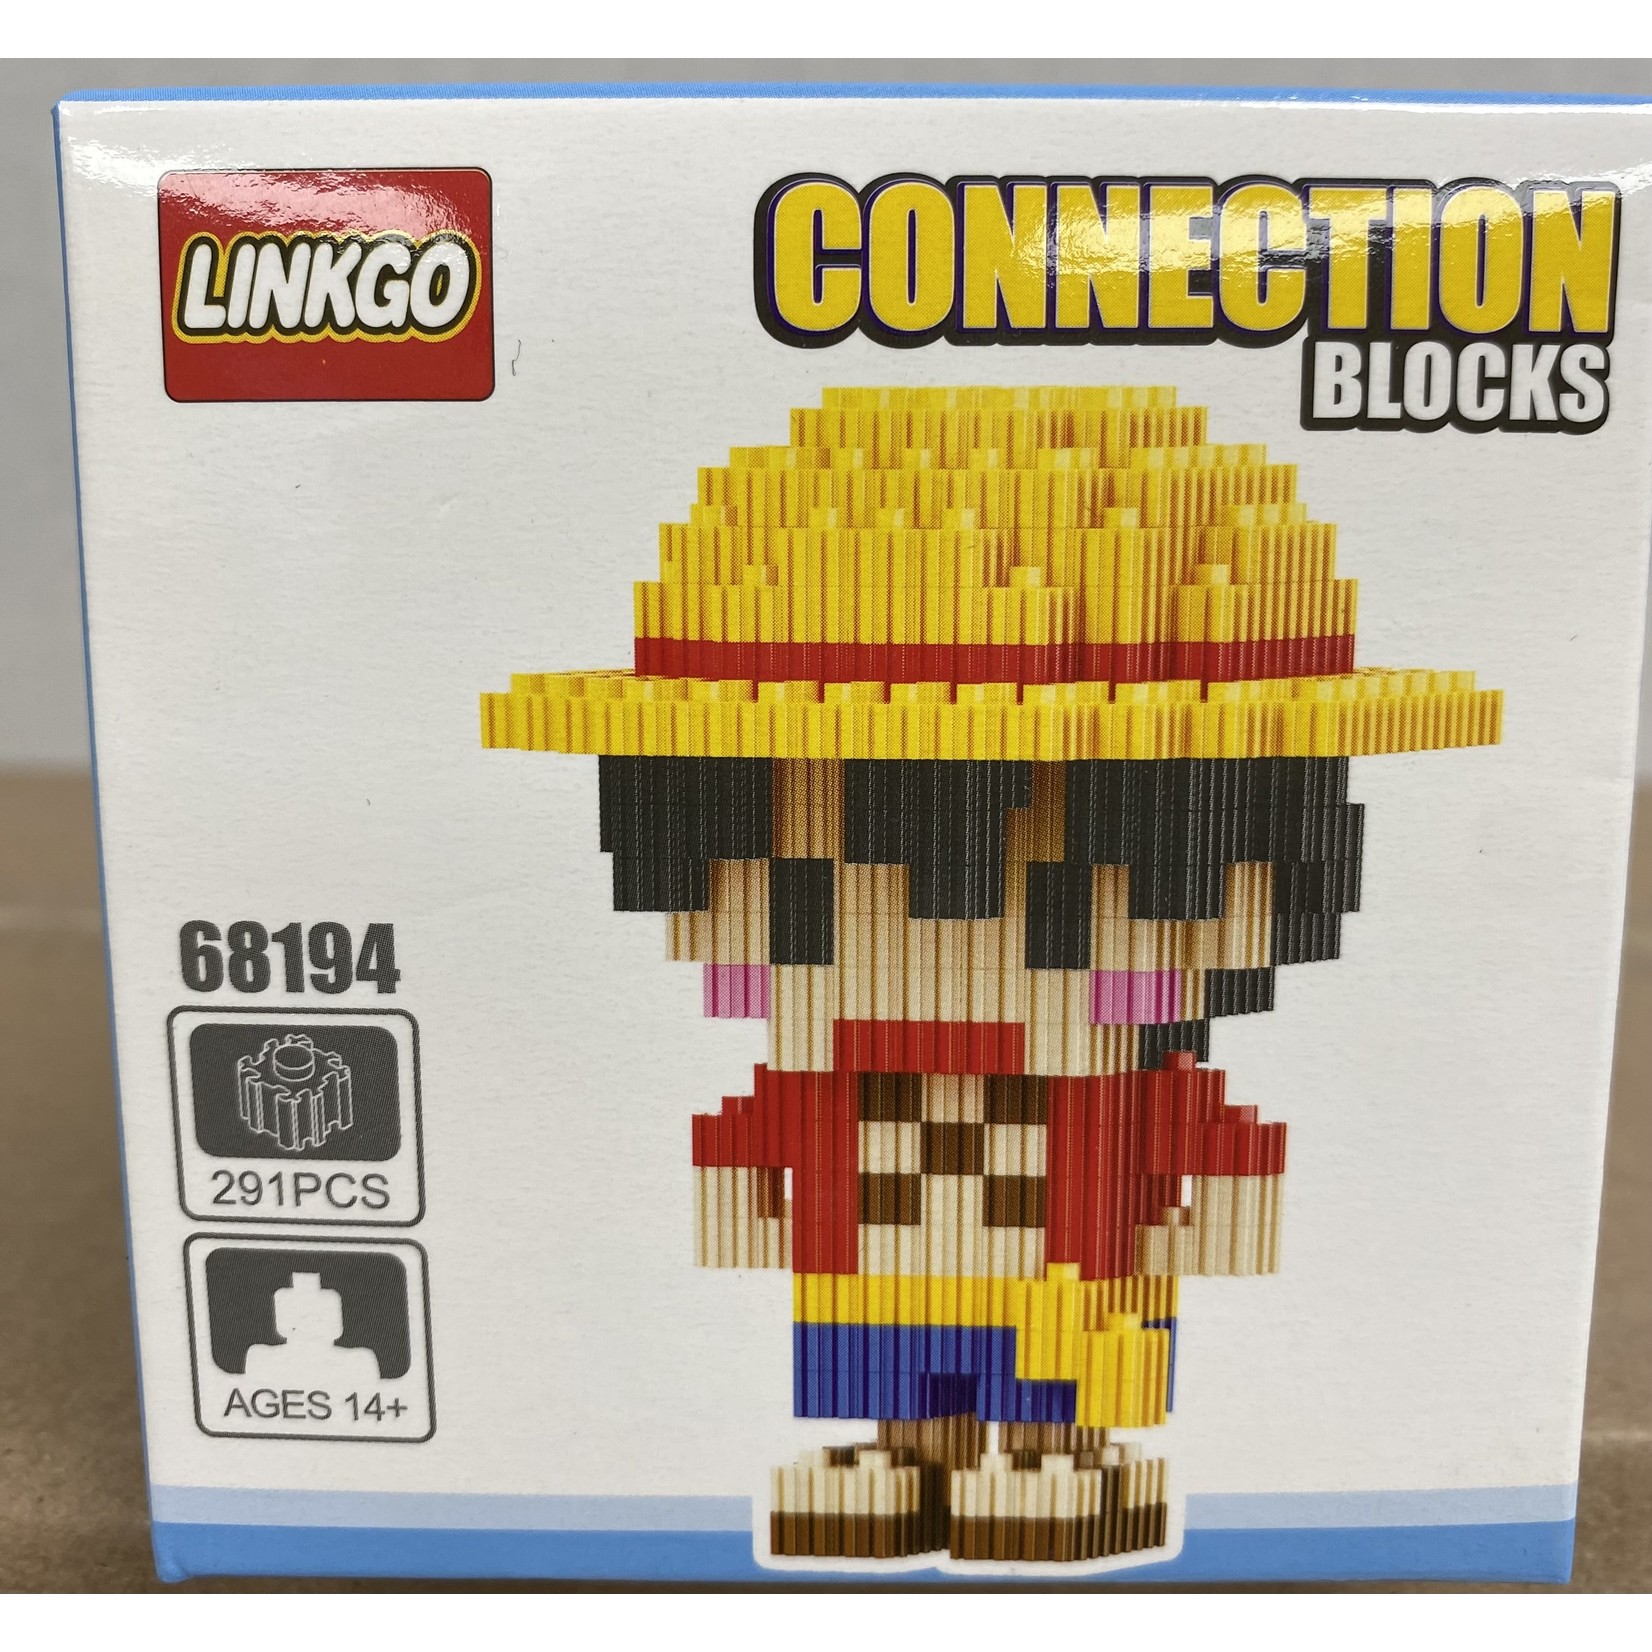 Linkgo - Connection Blocks - 68194